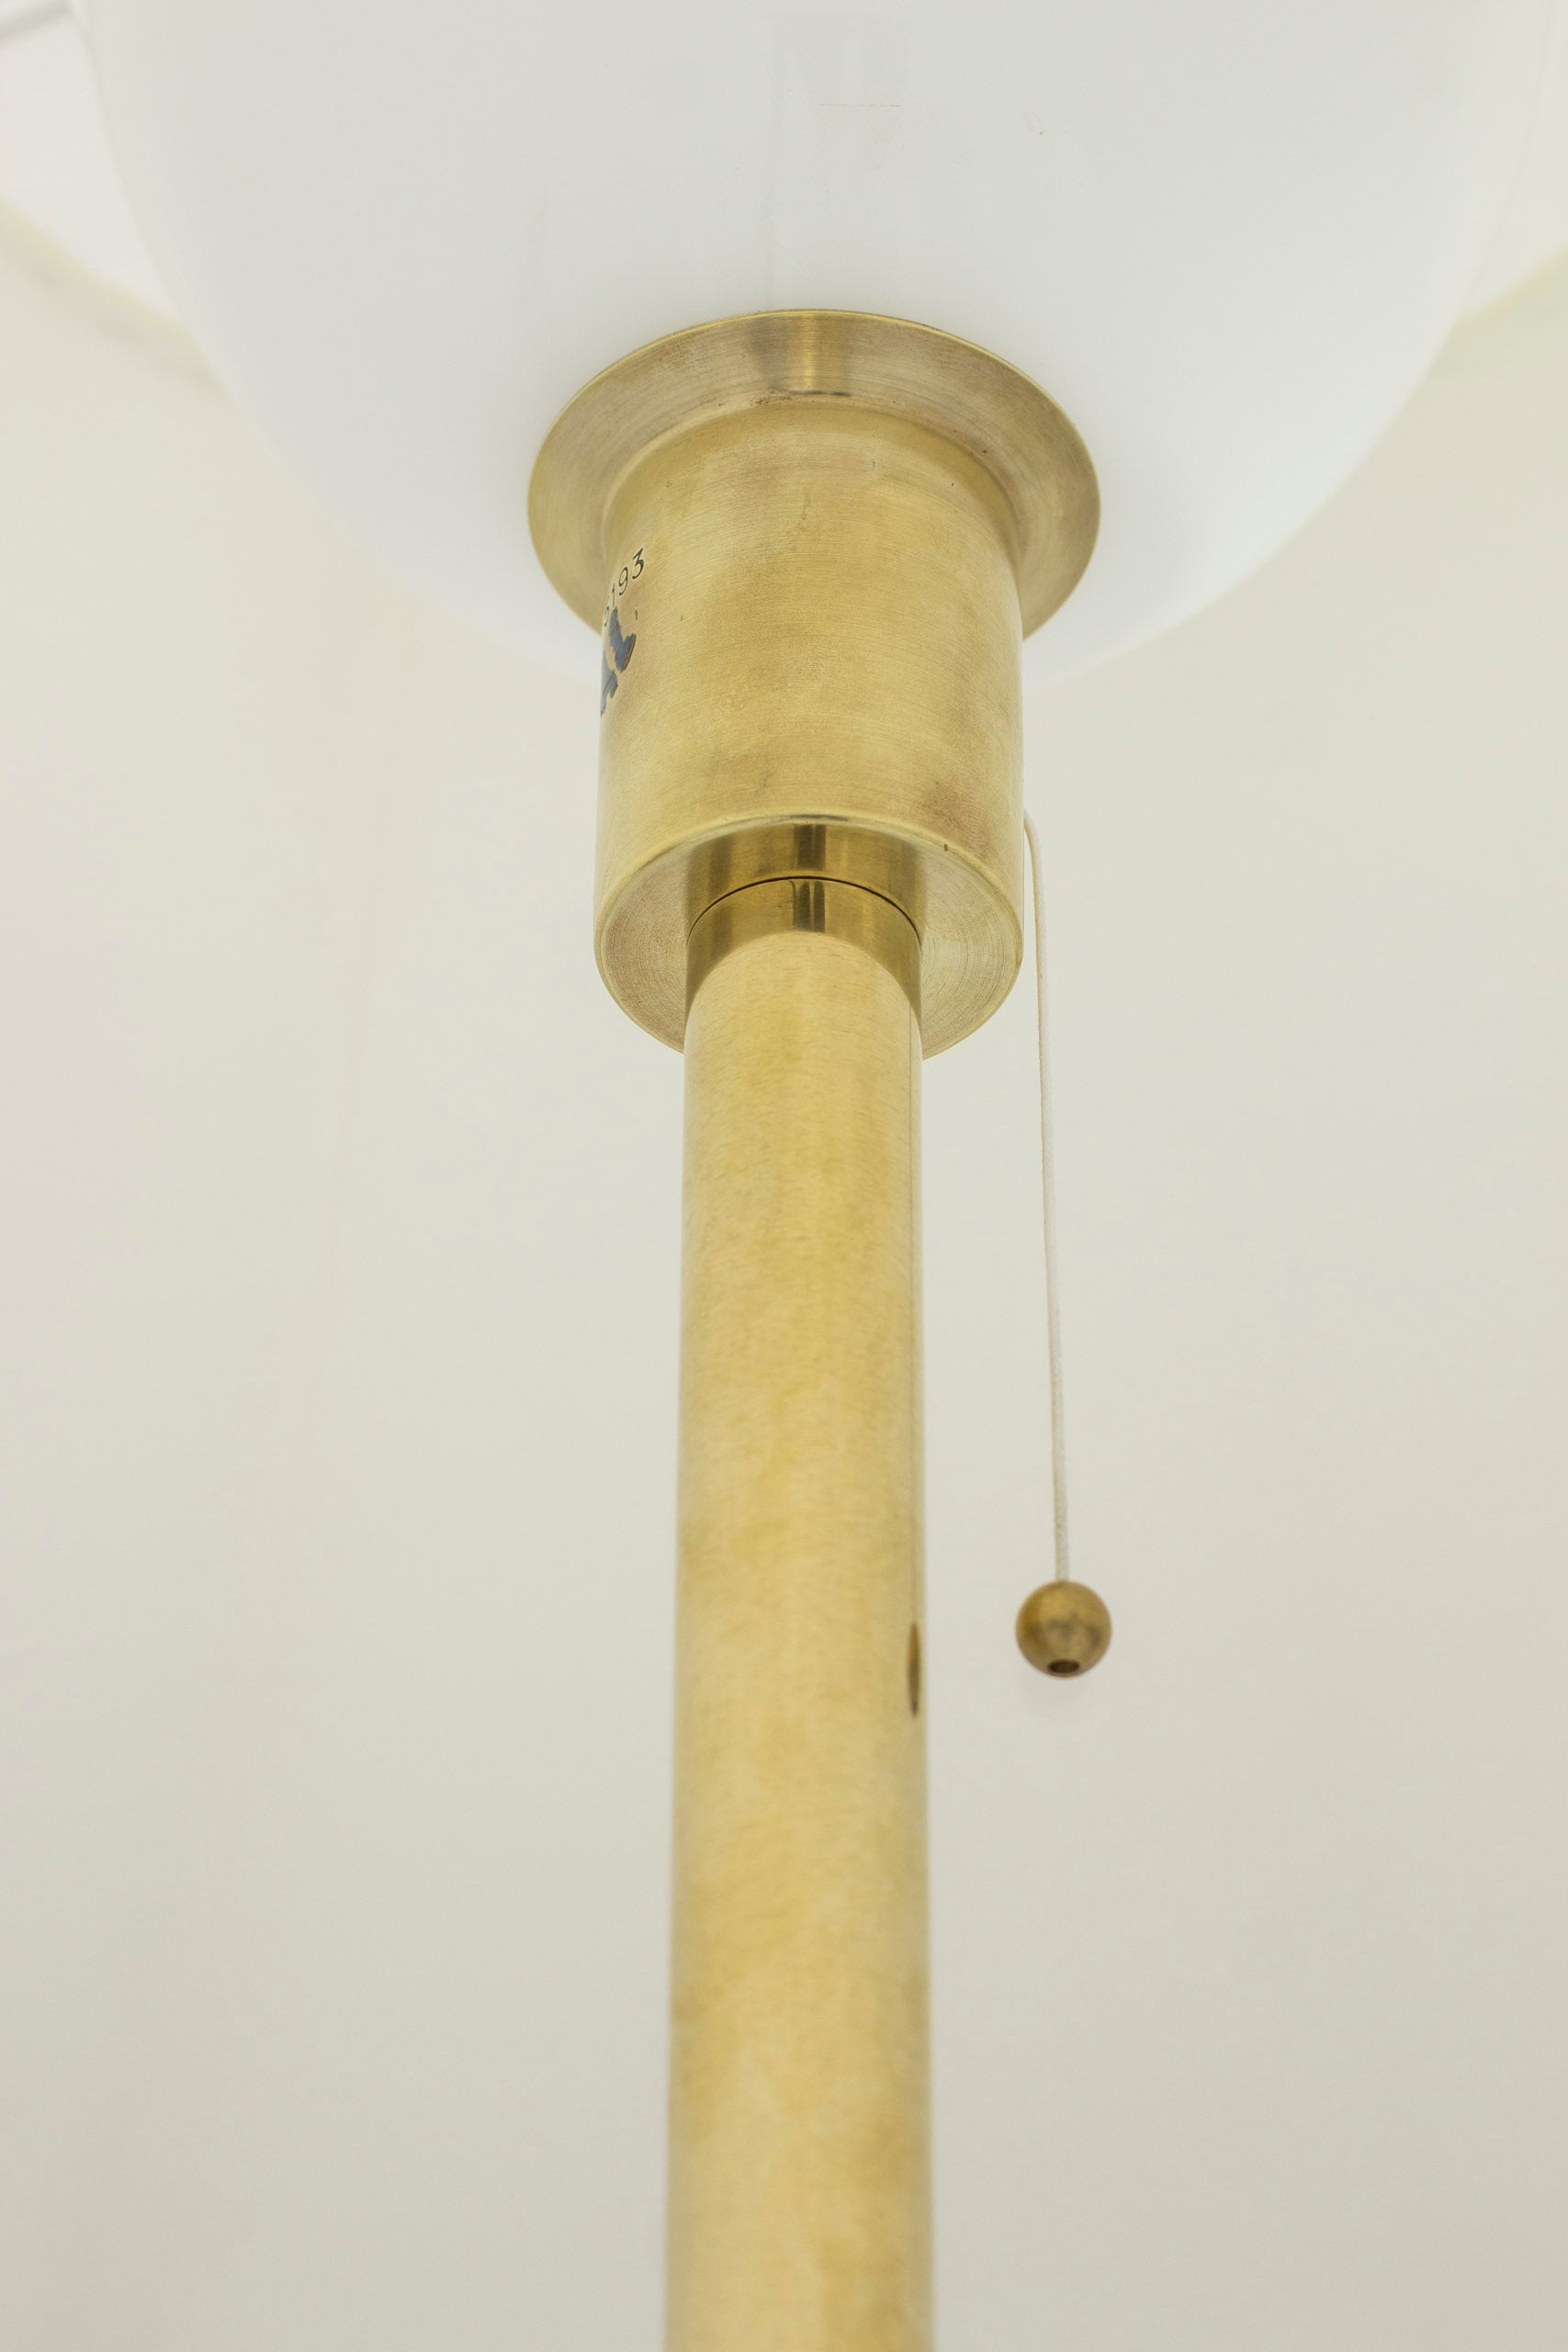 Floor lamp by Harald Notini